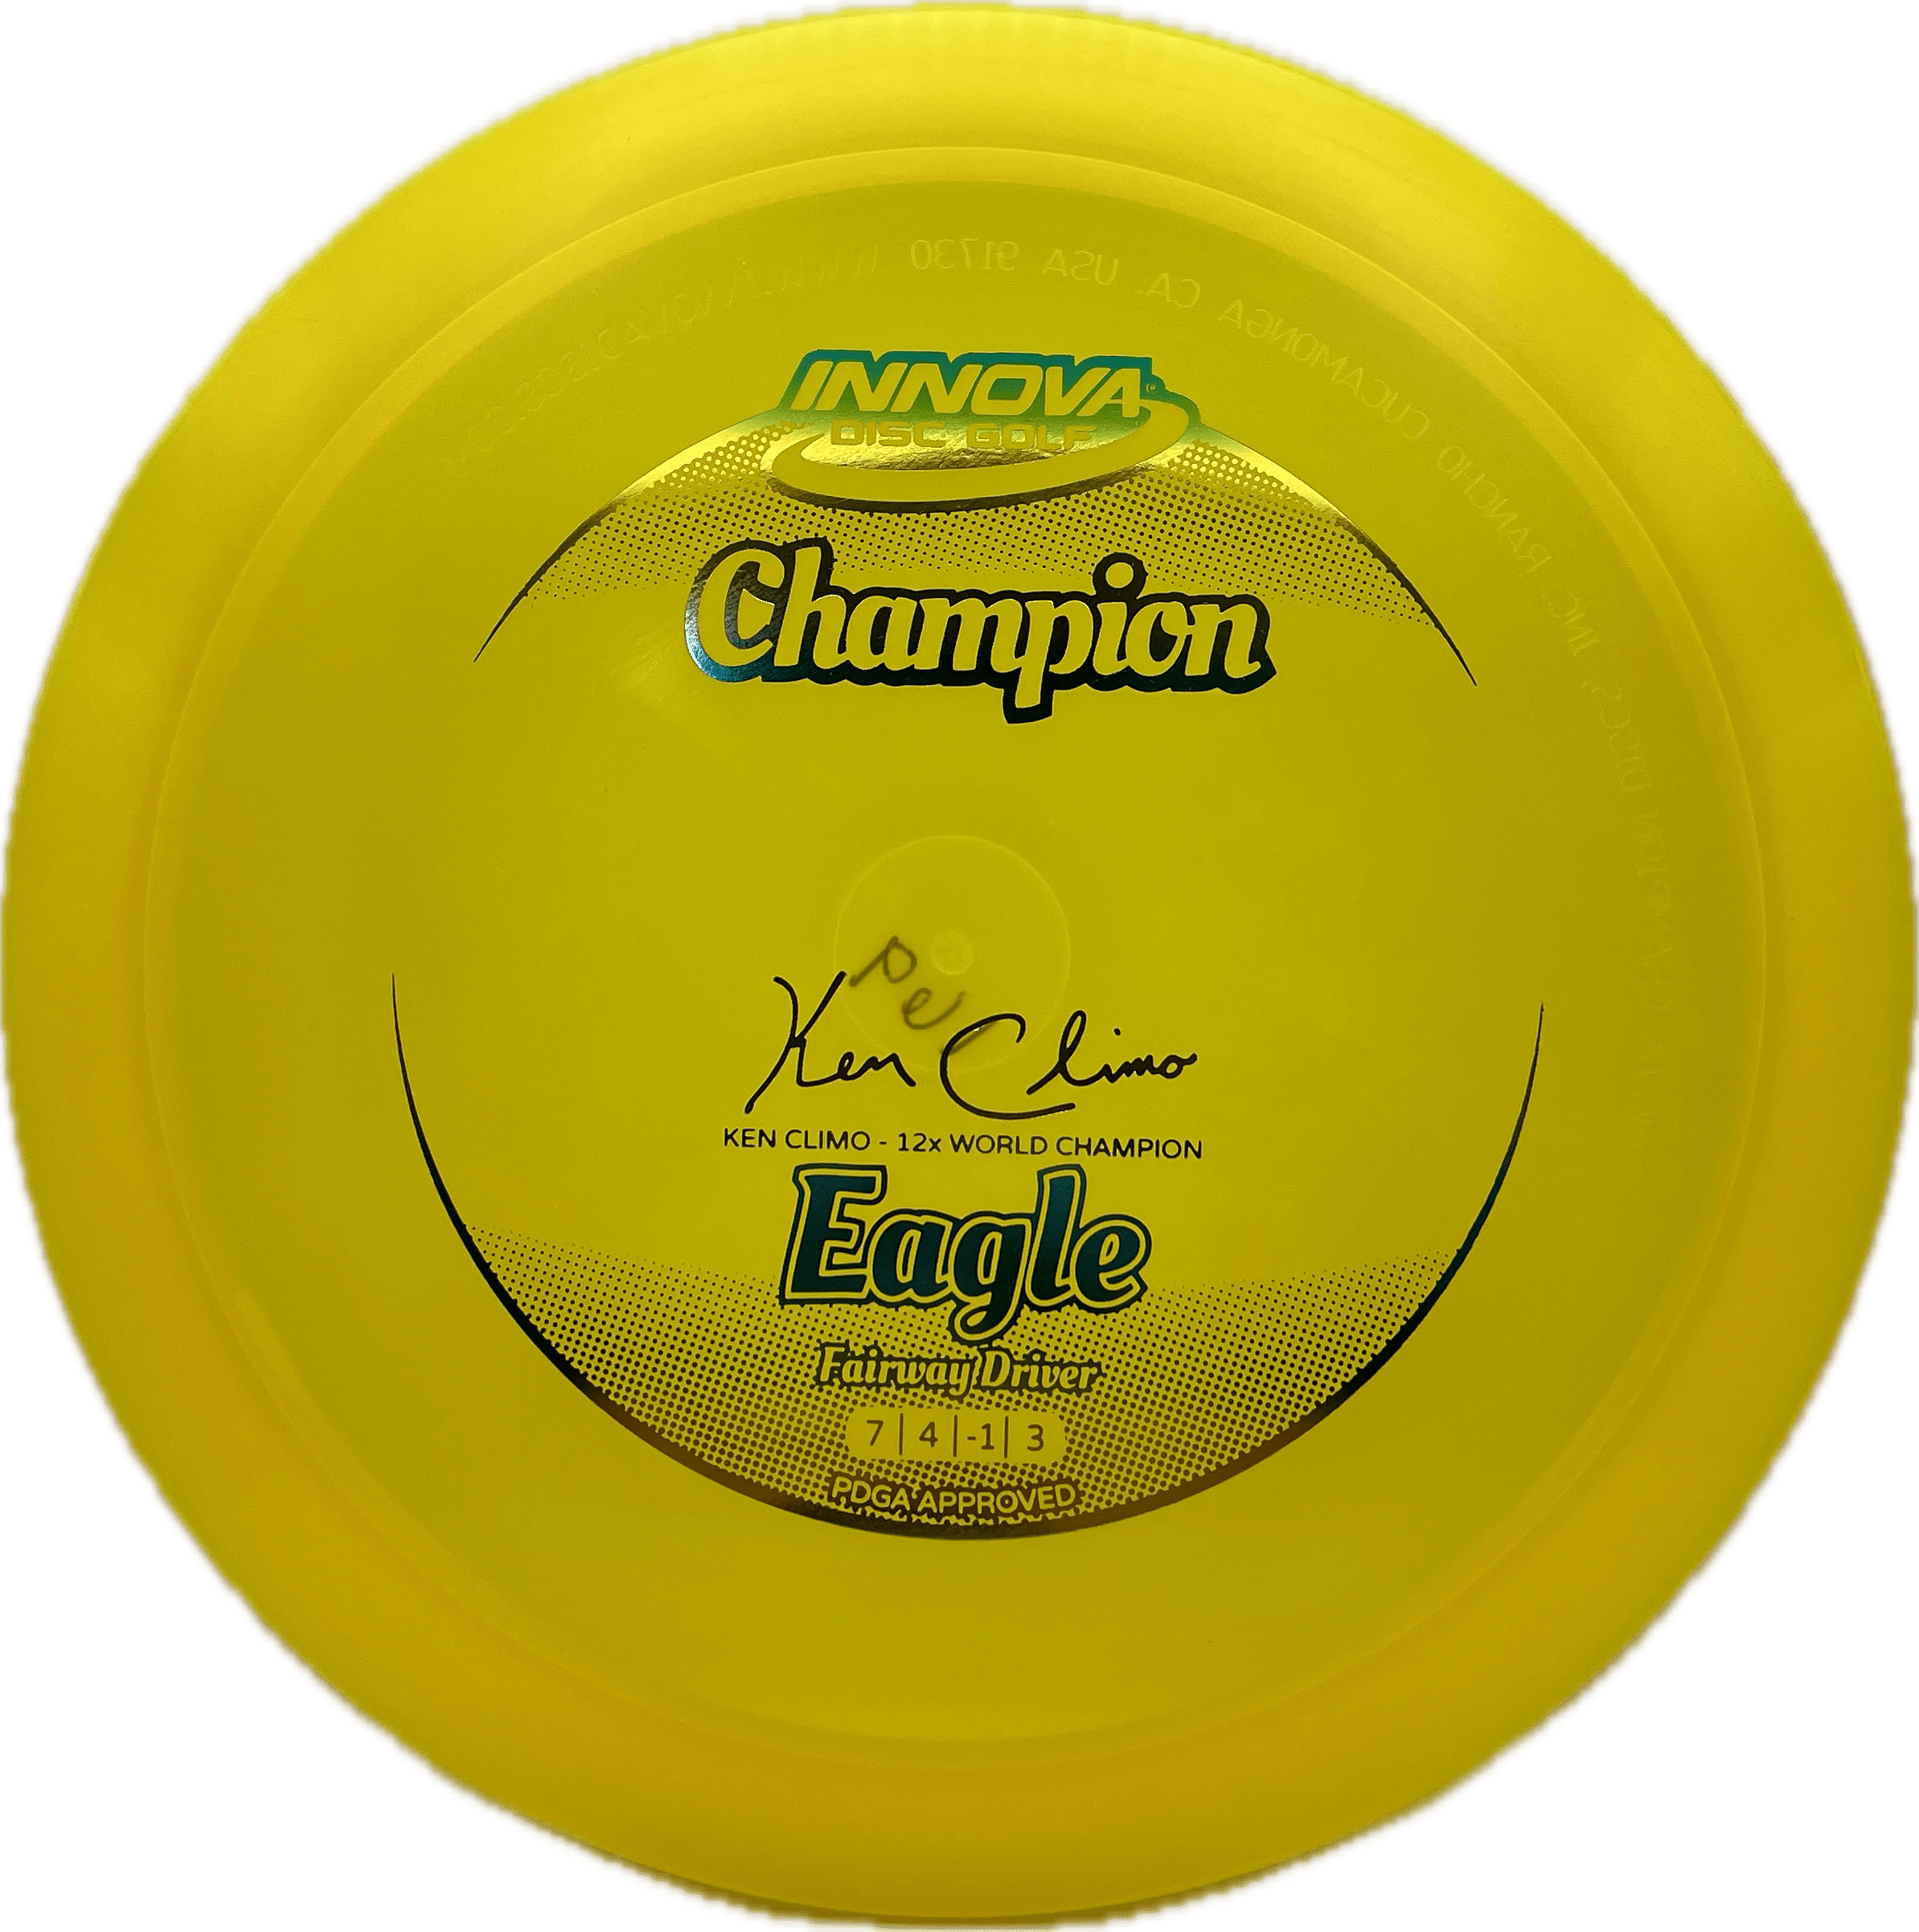 Innova Disc Innova Eagle, Champion, 165-169, Yellow, Spring Sunset